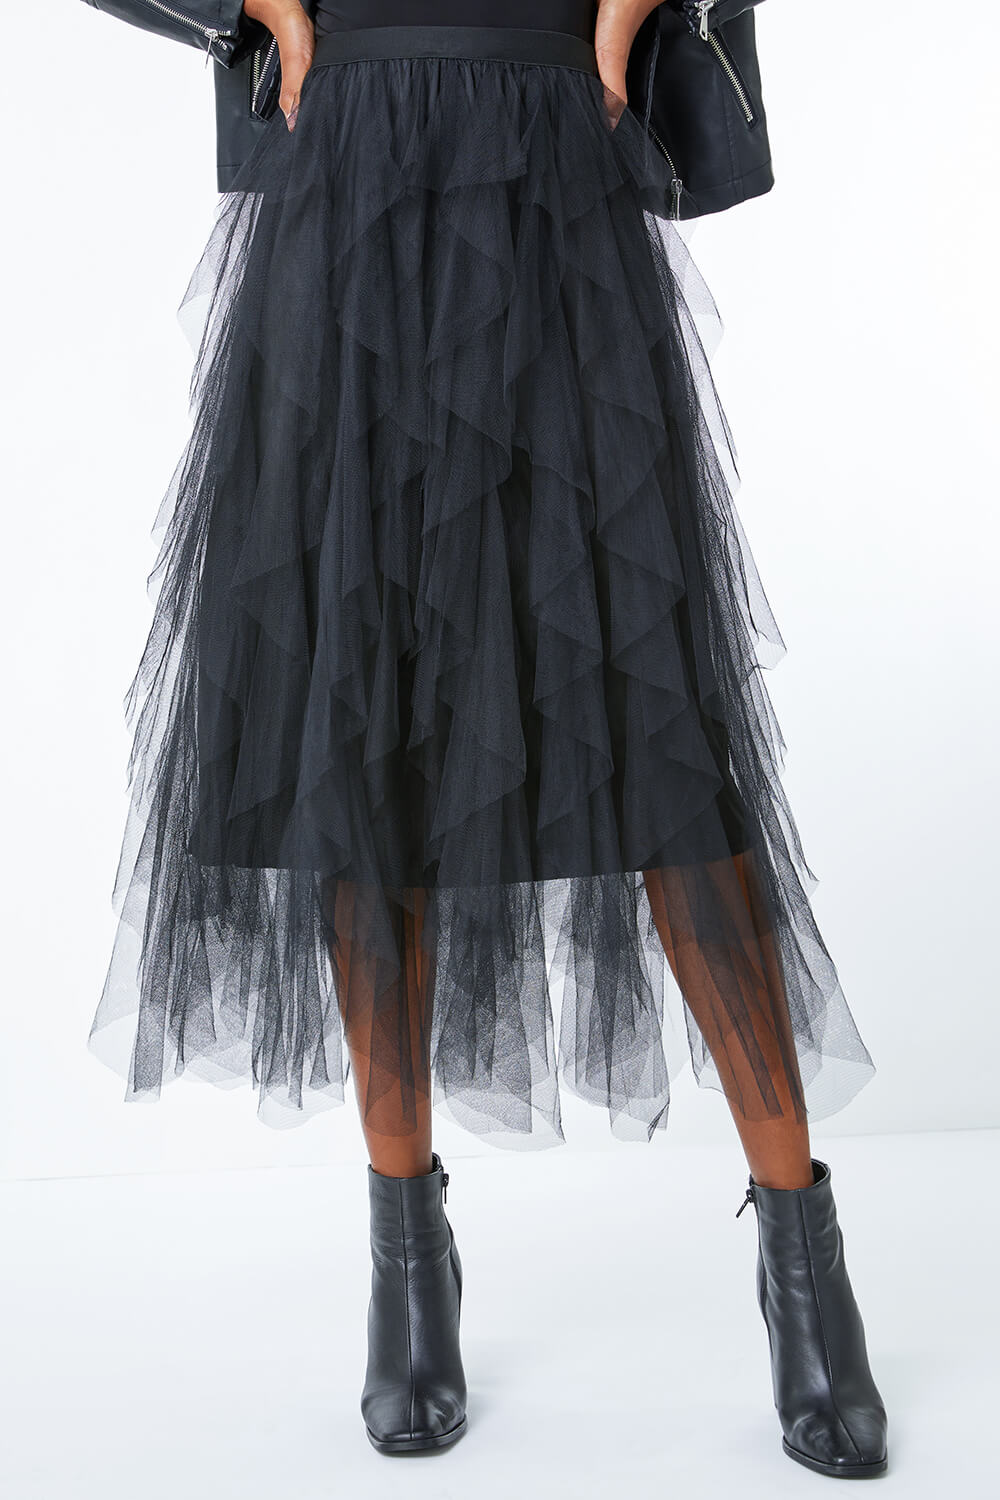 Black Elasticated Mesh Layered Skirt, Image 5 of 5